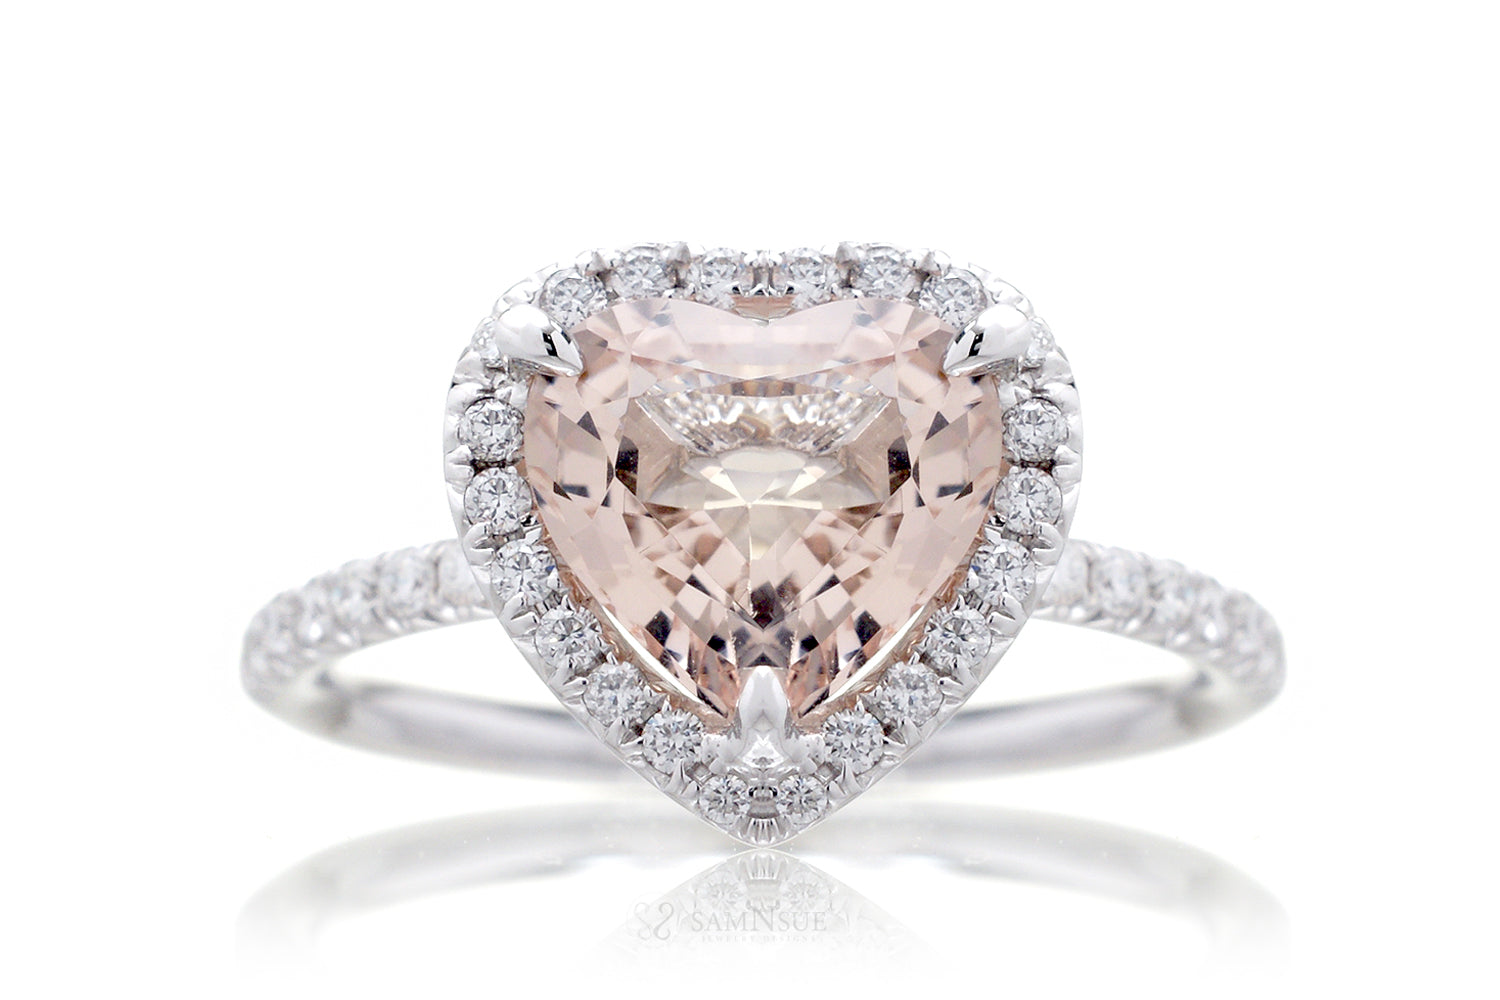 Heart morganite diamond halo engagement ring in white gold